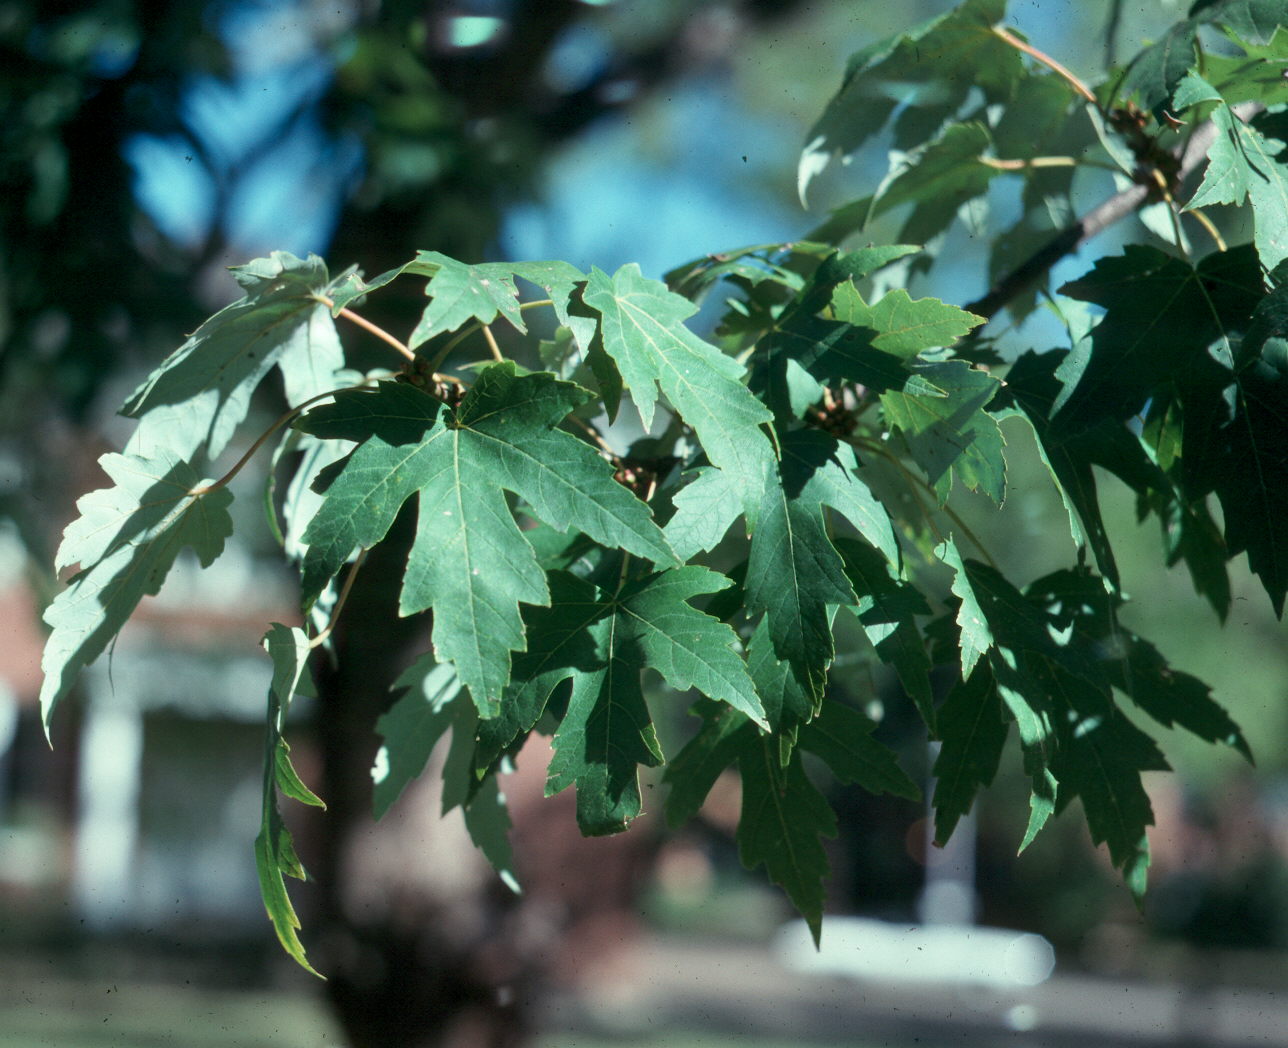 Acer saccharinum / Silver Maple